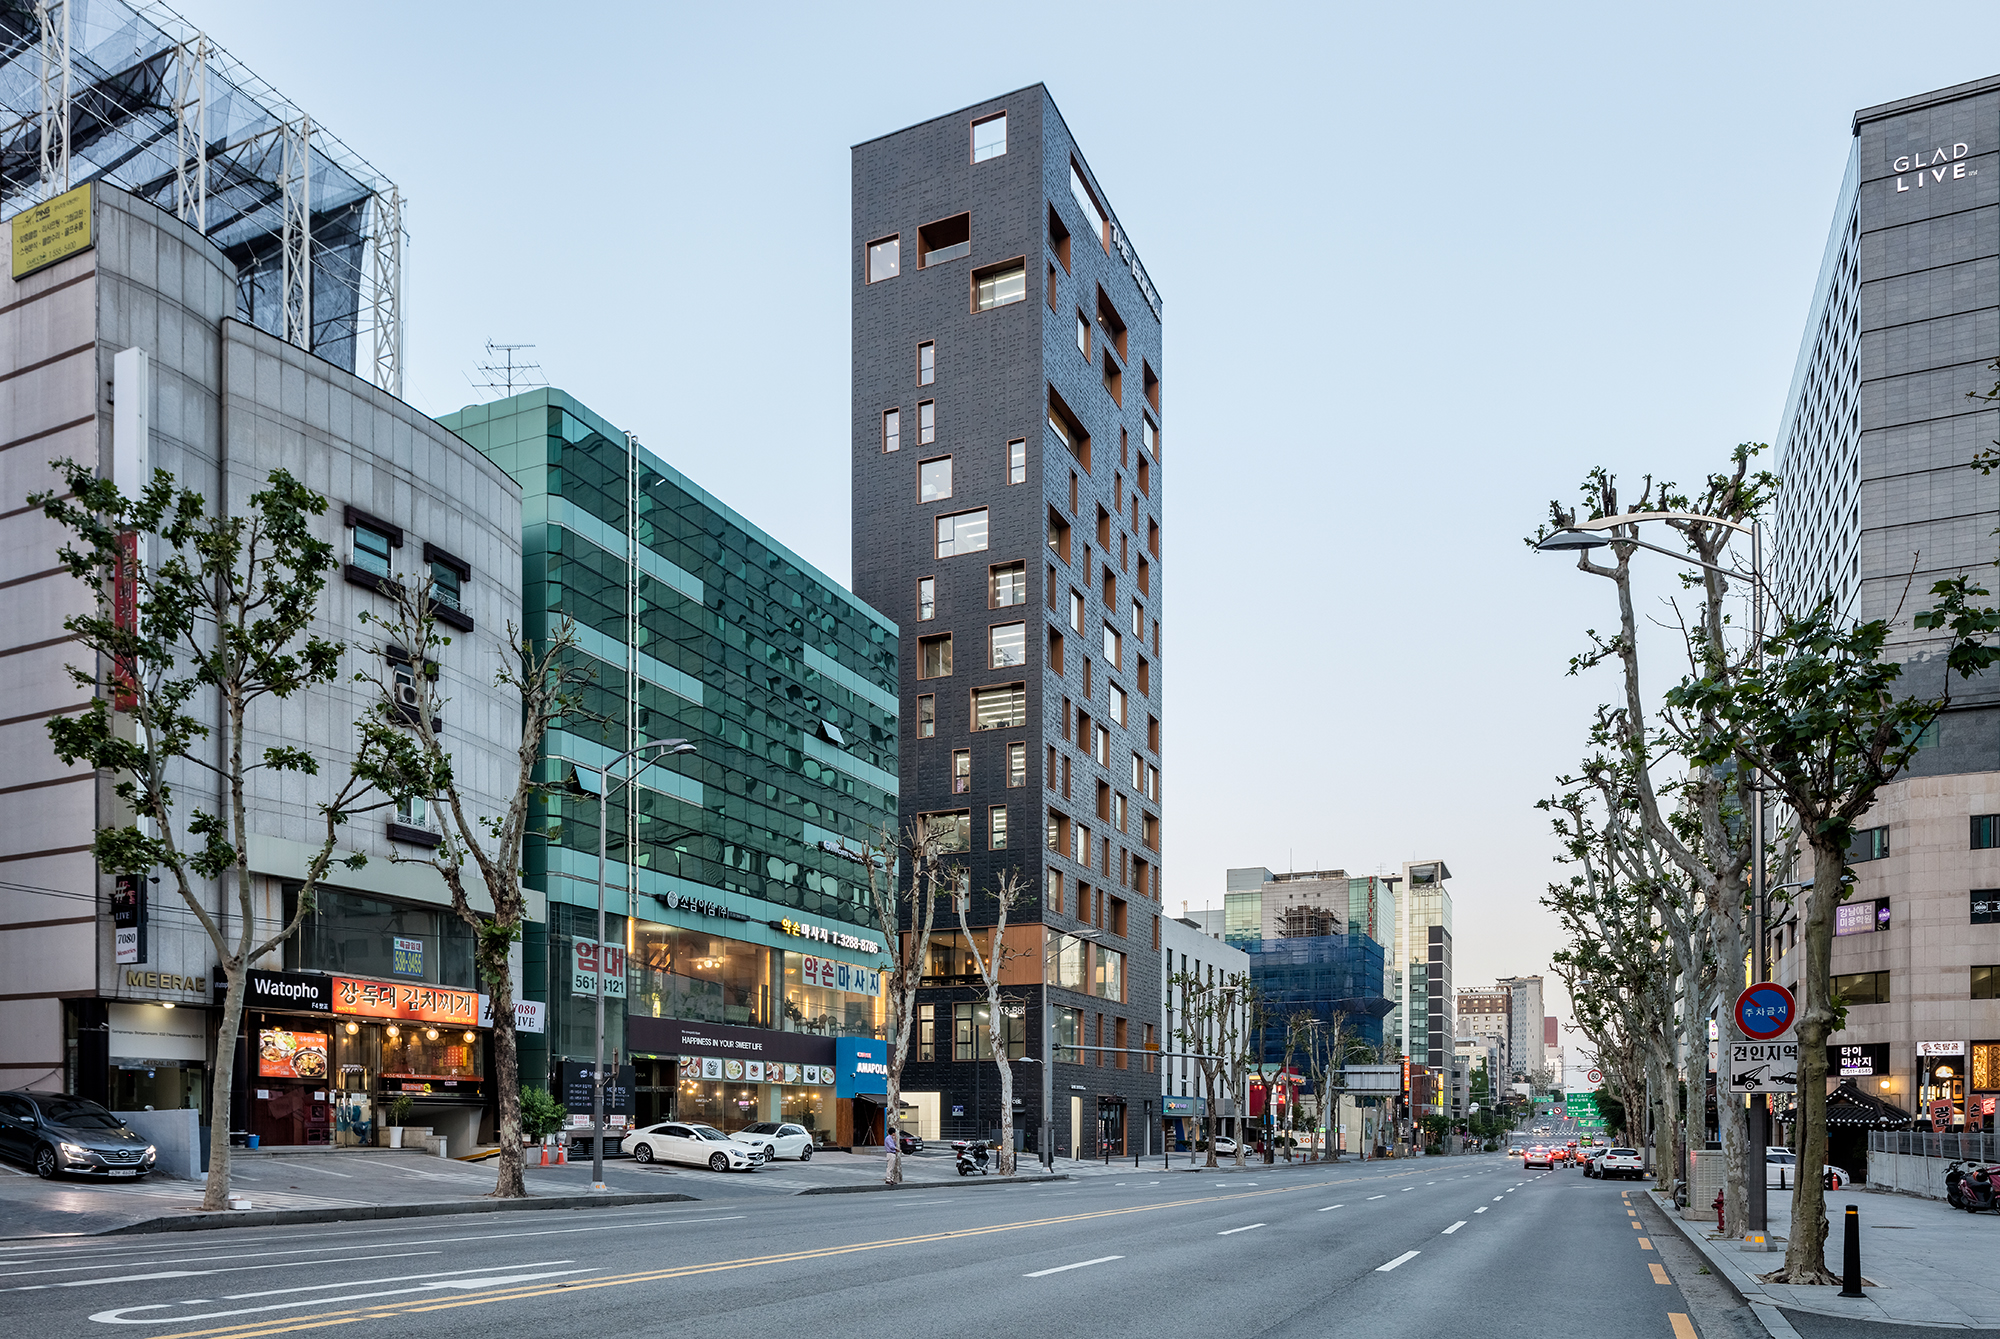 The Book Company Headquarters by N.E.E.D. Architecture. Credit: Kyungsup Shin.